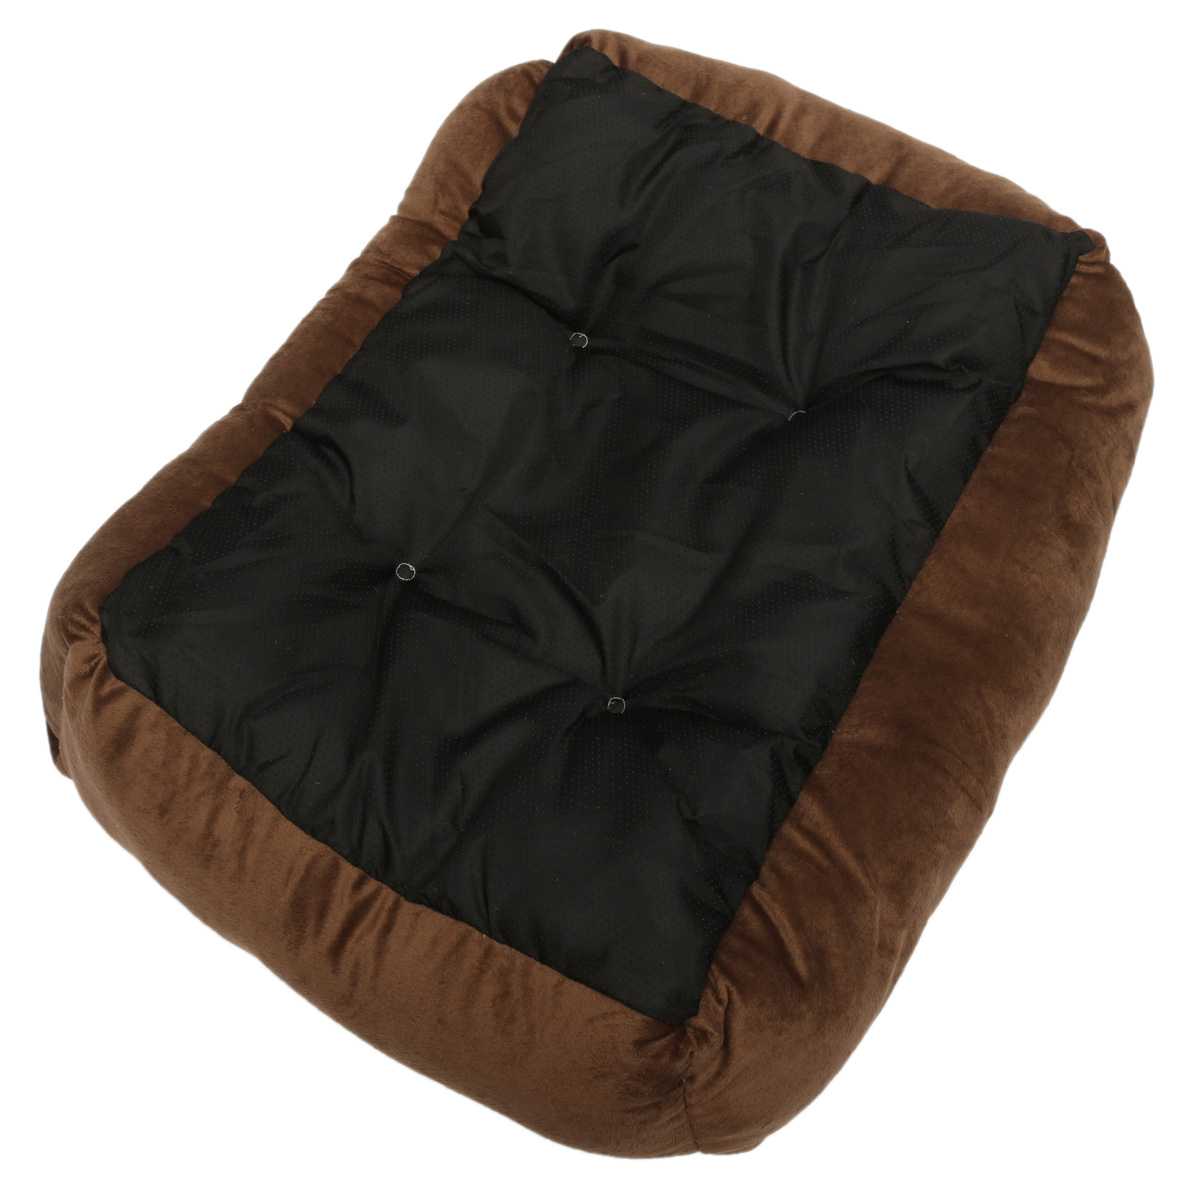 Large-Pet-Dog-Warm-Bed-Puppy-Cat-Soft-Fleece-Cozy-Mat-Pad-Kennel-Cushion-Pet-Mat-1037381-8